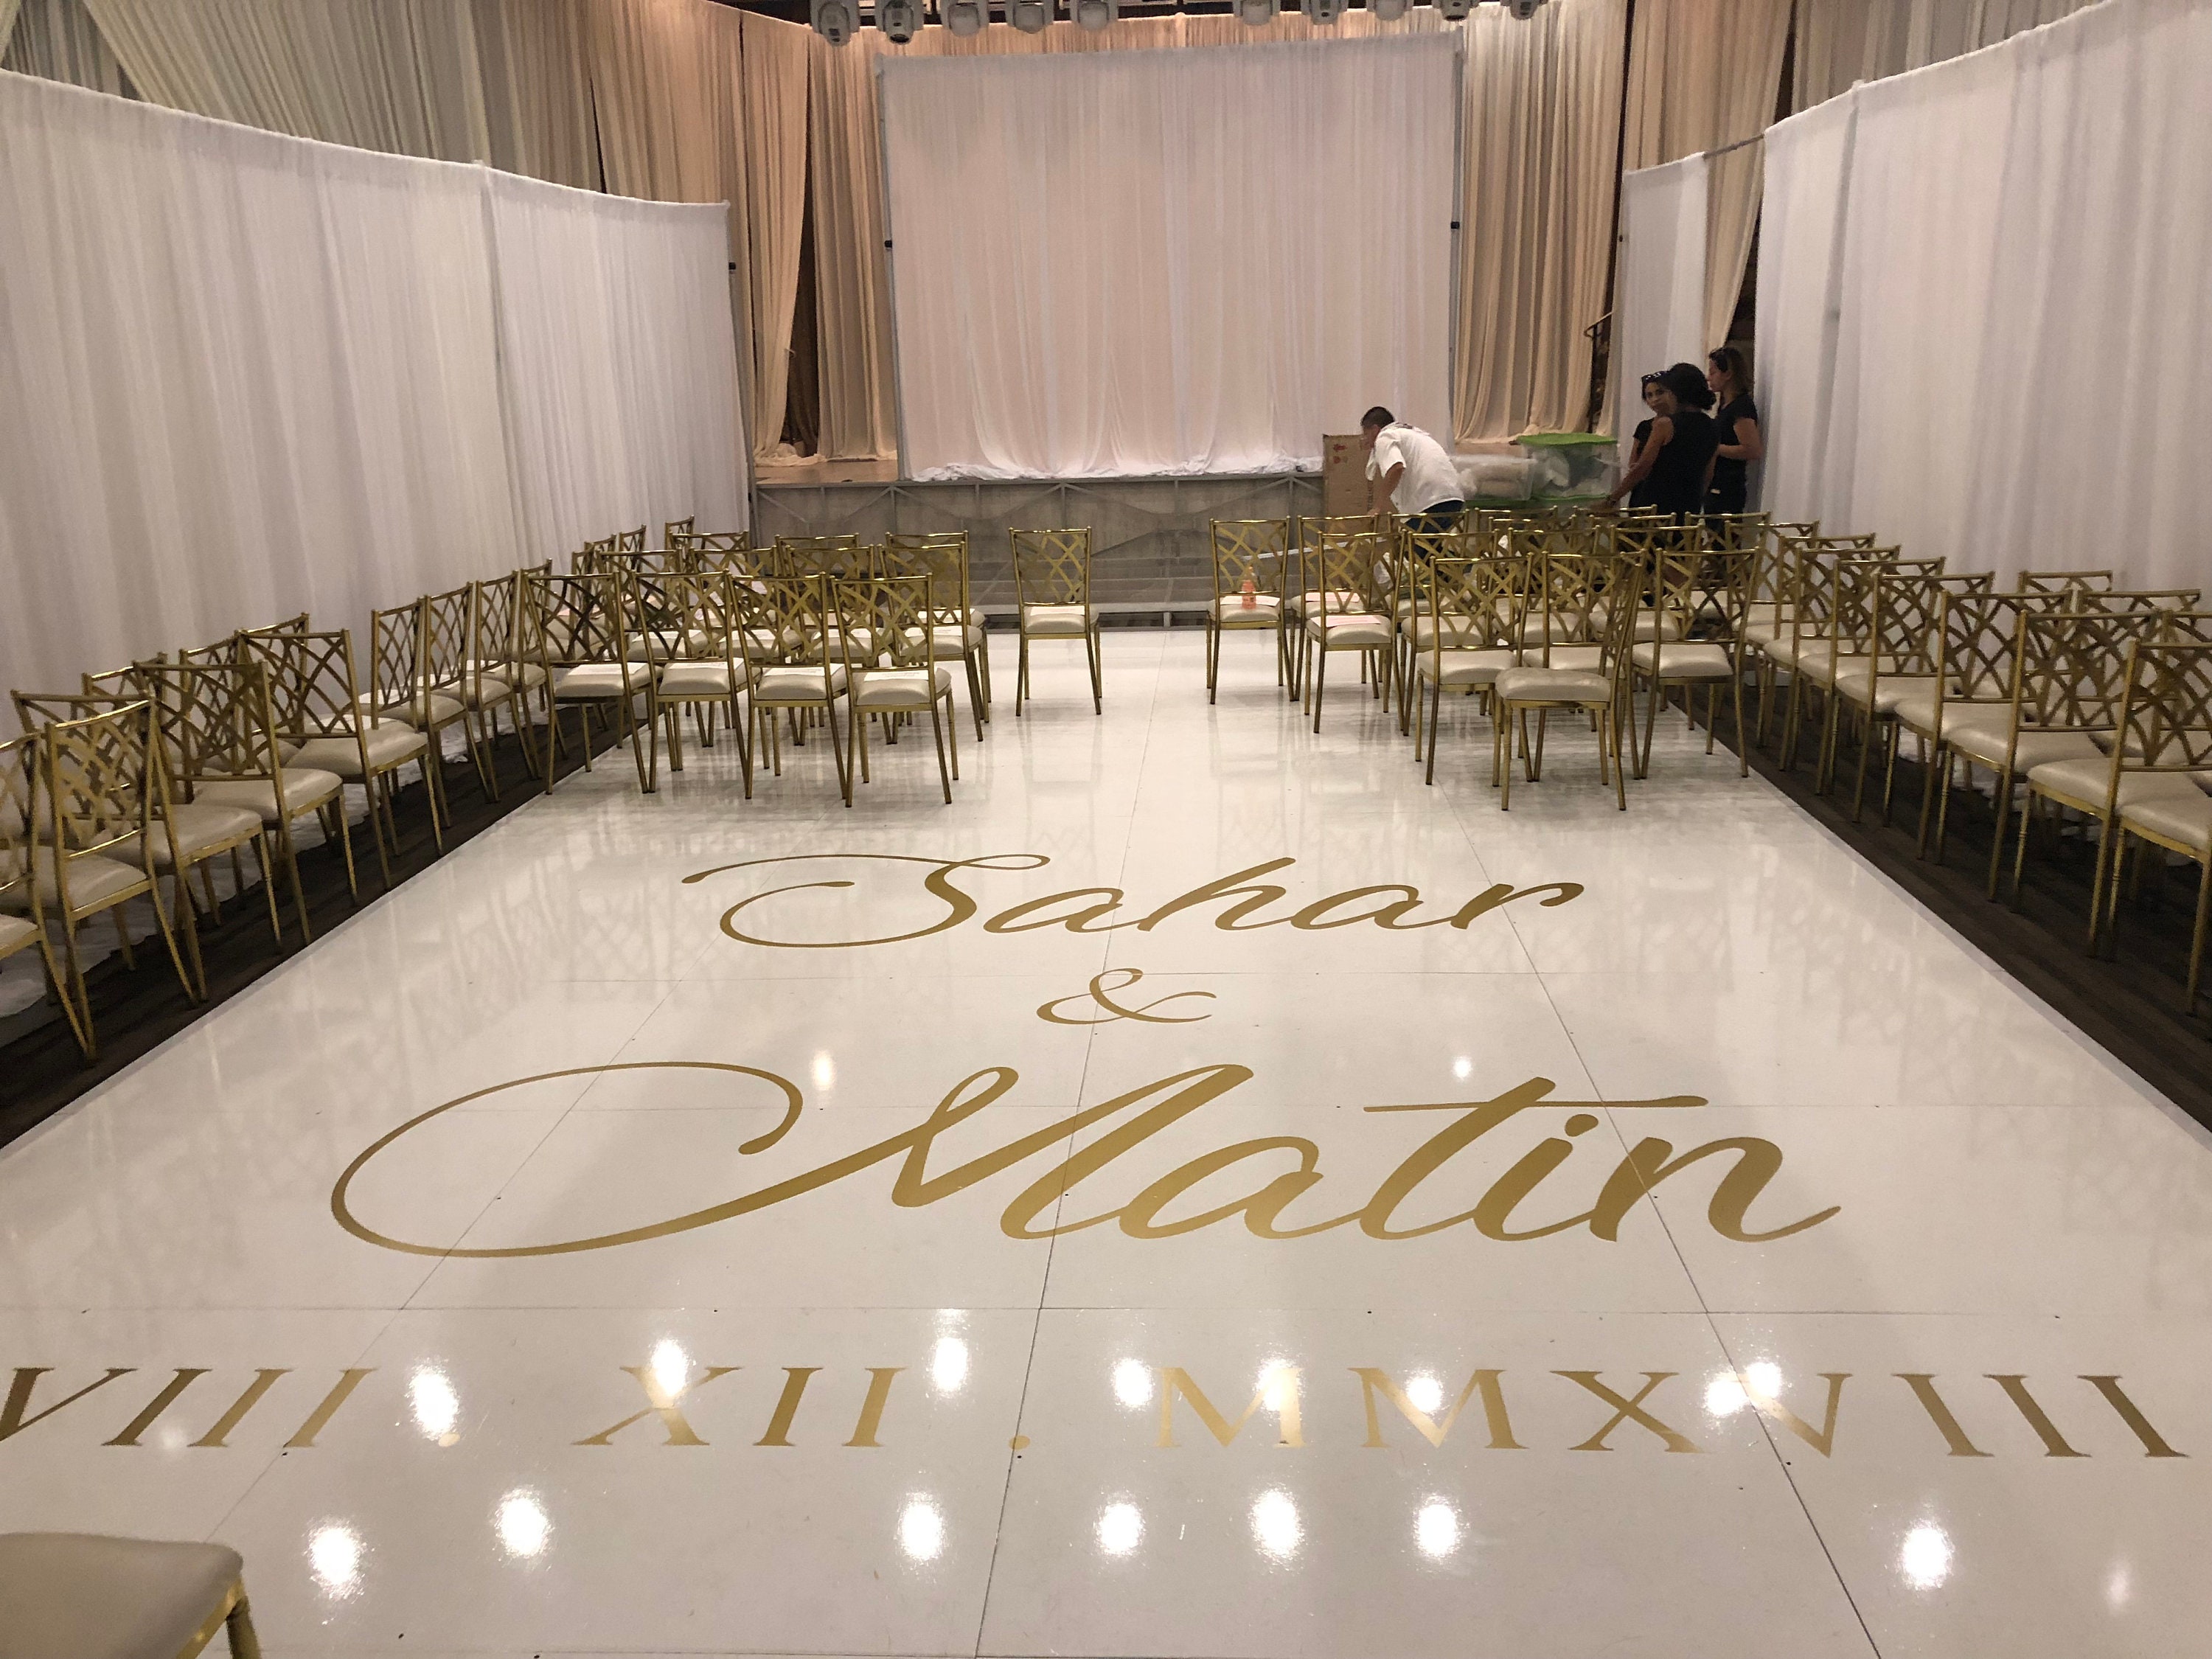 Bride Groom Names Date Personalized Wedding Dance Floor Etsy